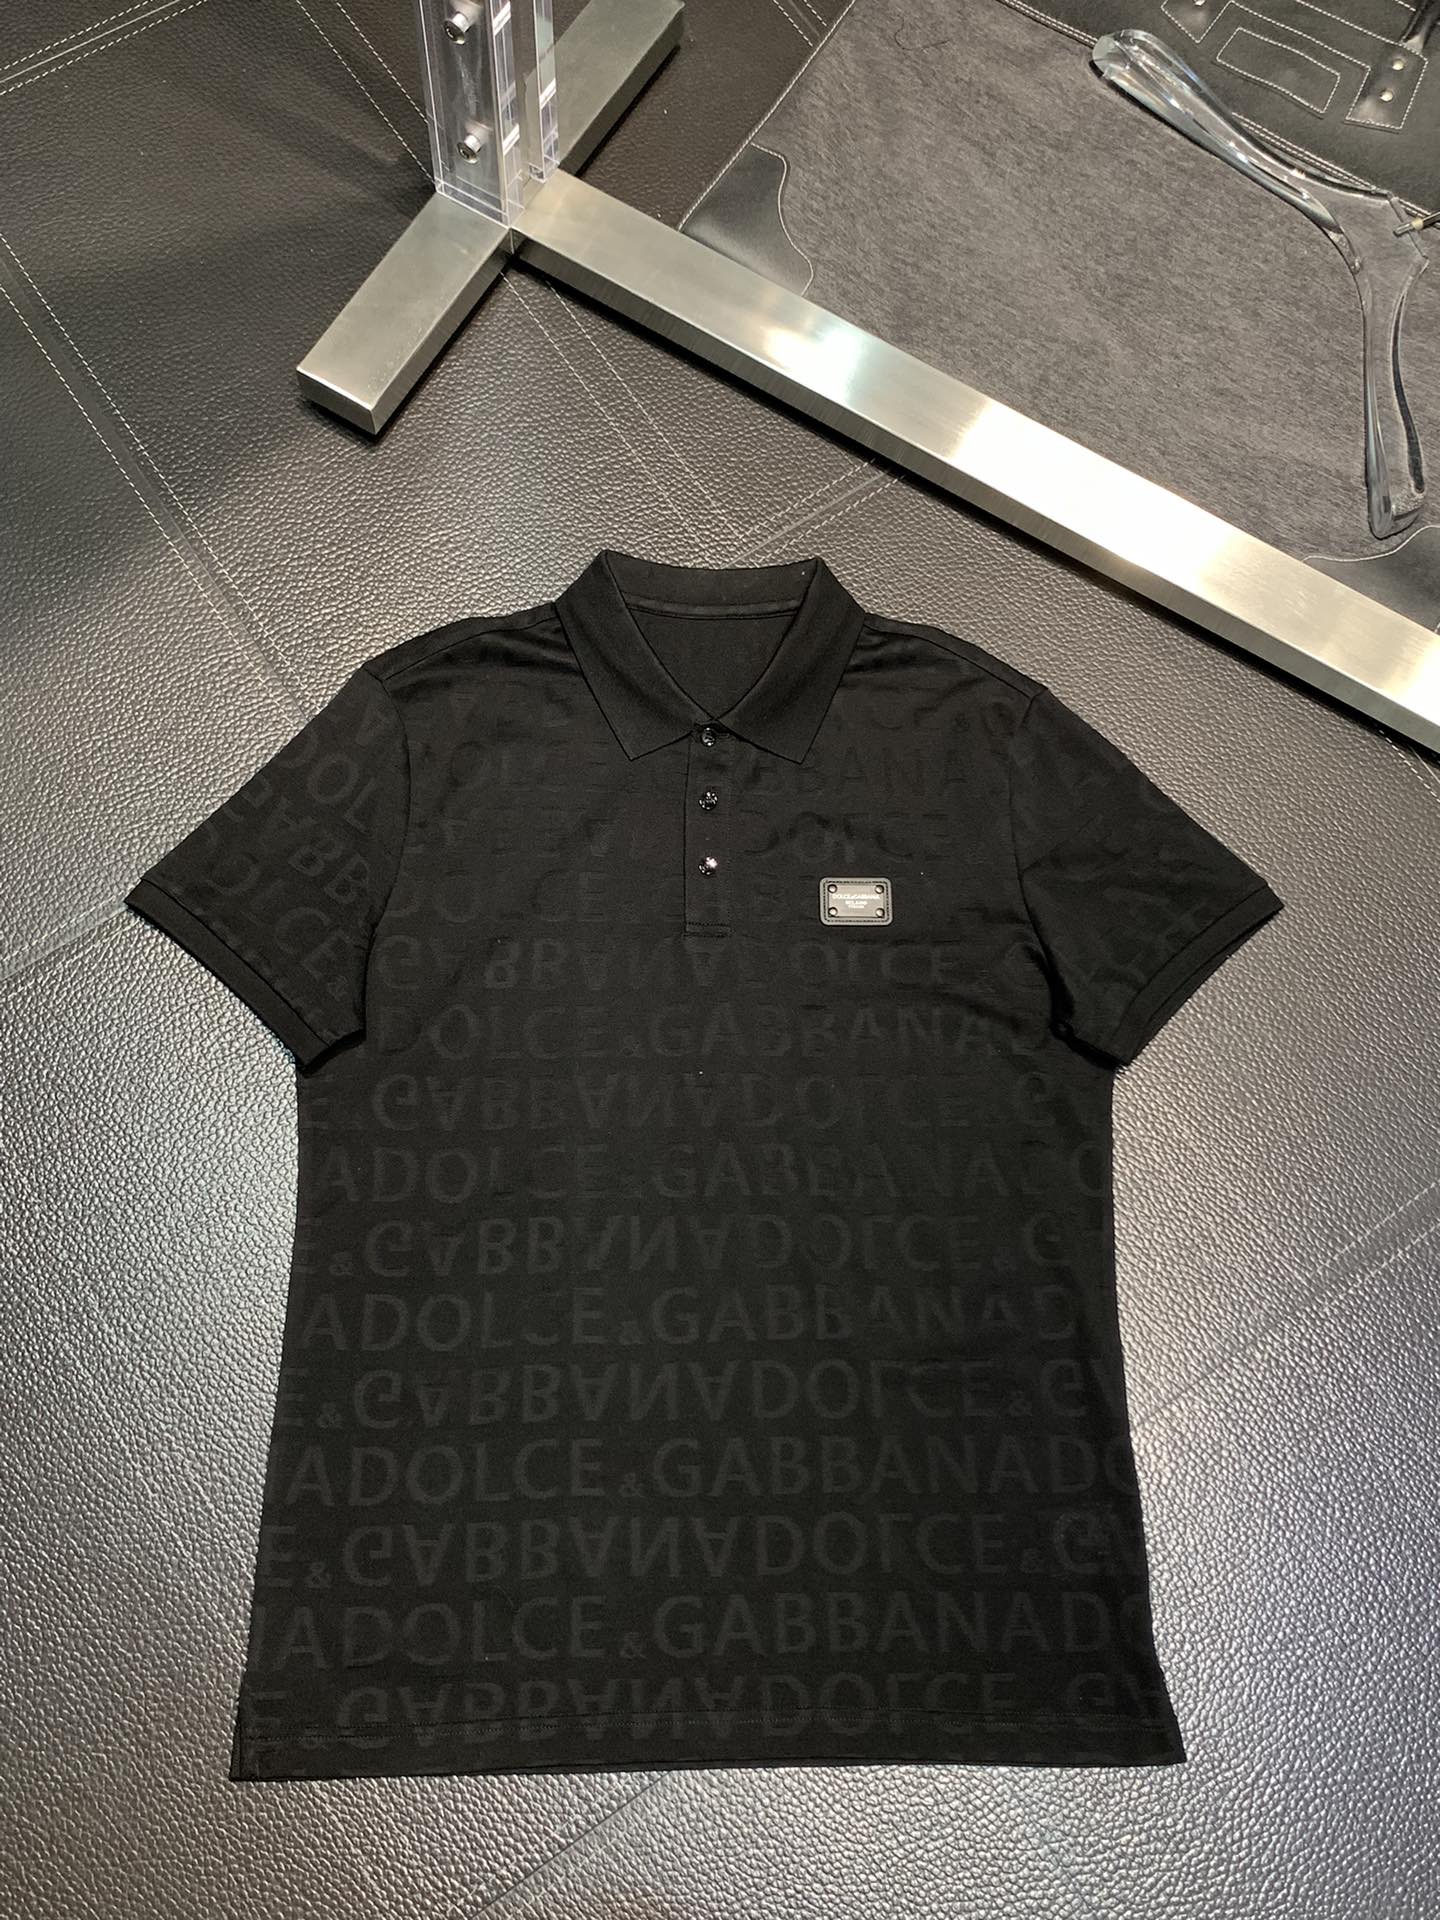 Dolce & Gabbana Clothing Polo T-Shirt Men Fashion Short Sleeve